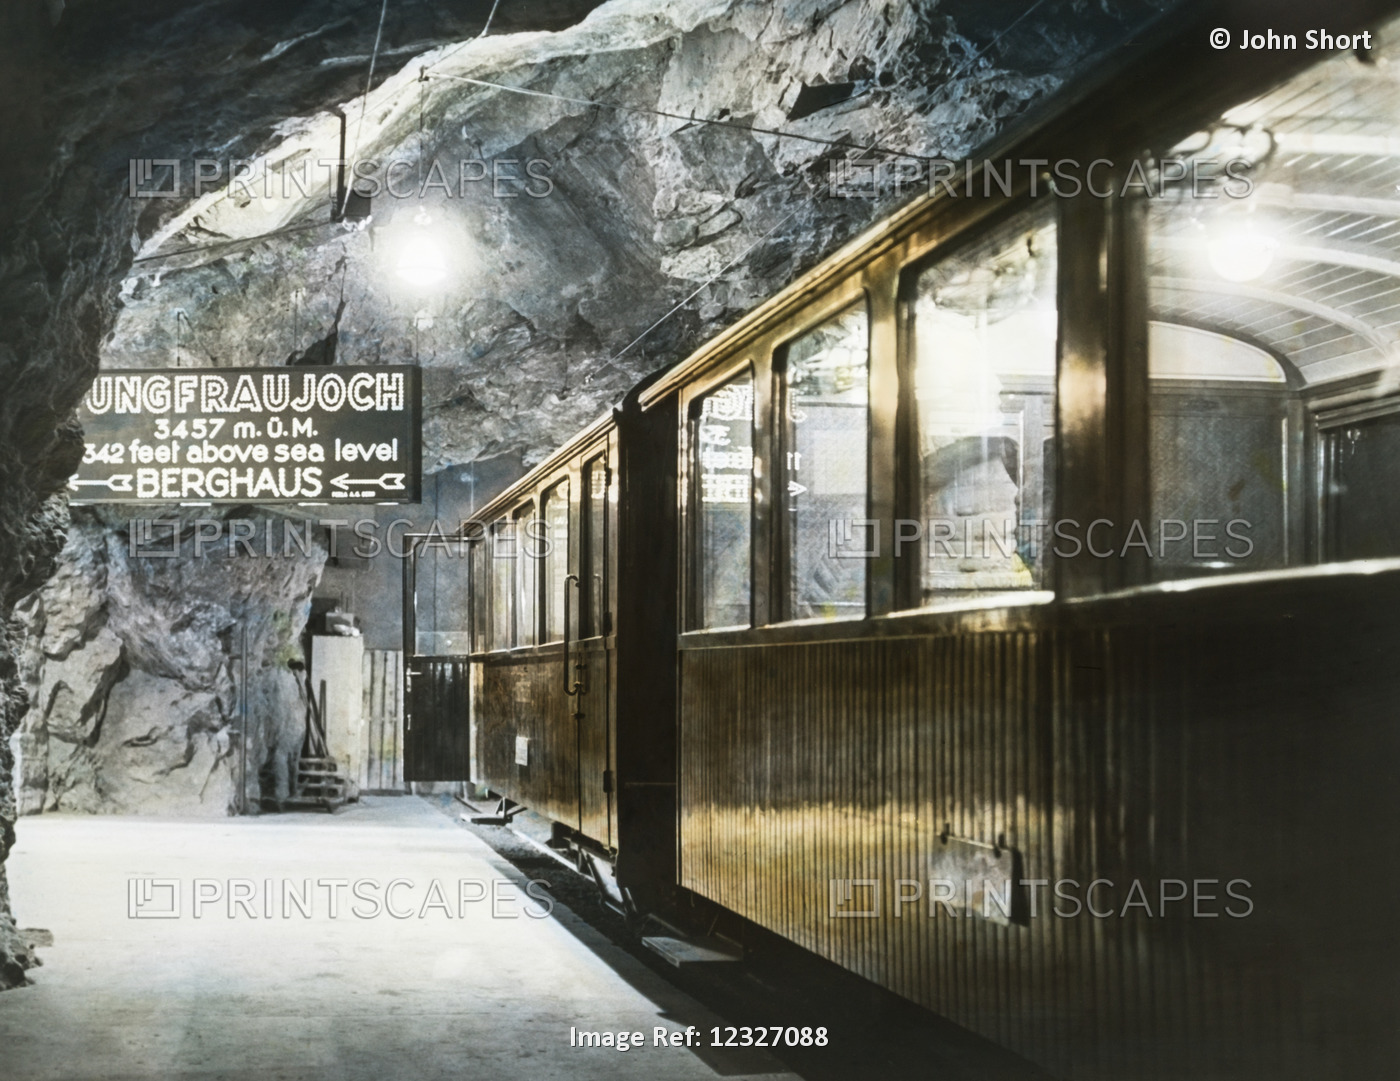 Jungfraujoch Underground Railway Station Situated Below The Jungfraujoch Col In ...